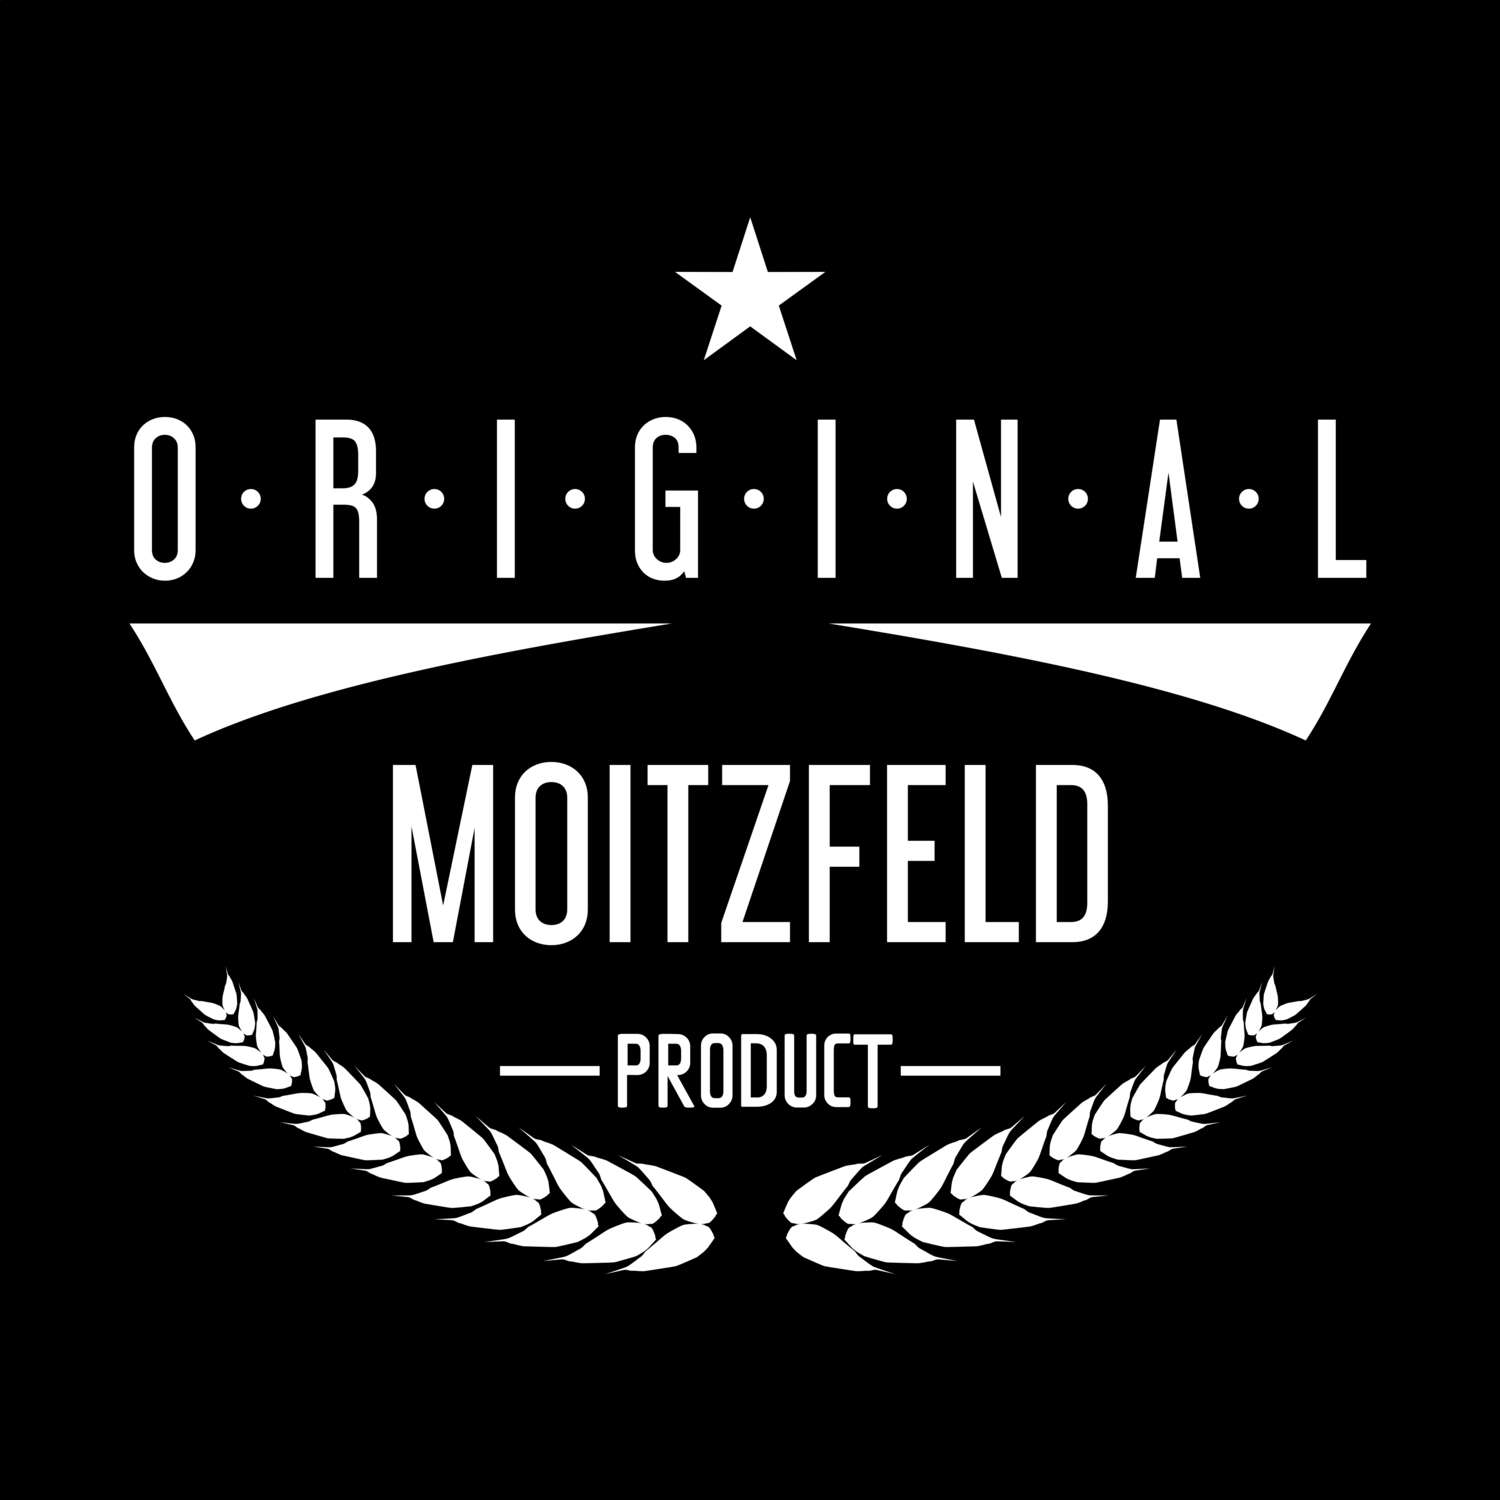 Moitzfeld T-Shirt »Original Product«